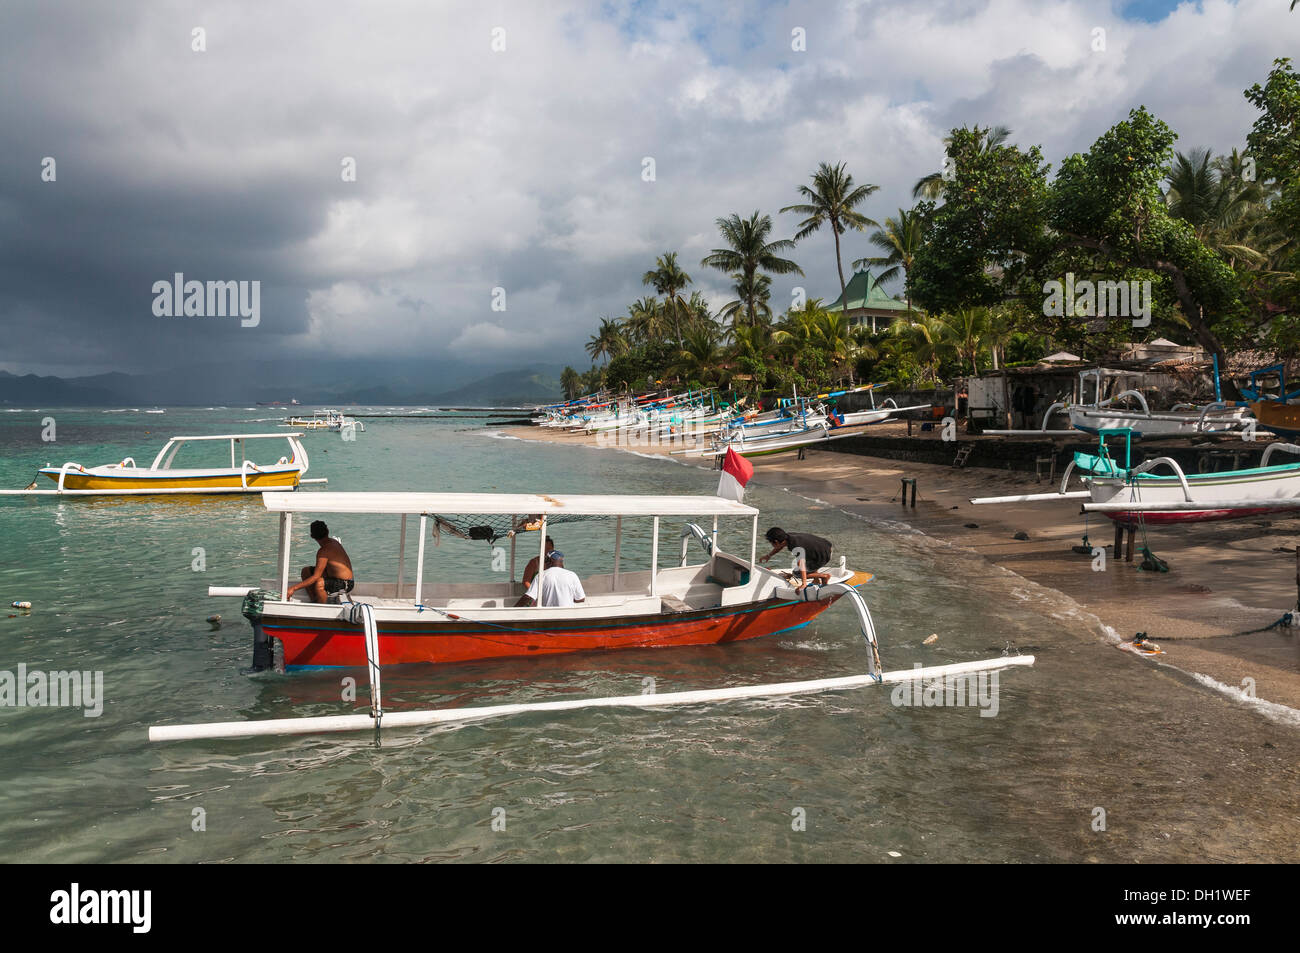 Fishing boats on the beach at Candi Dasa, Eastern Bali, Indonesia. Stock Photo